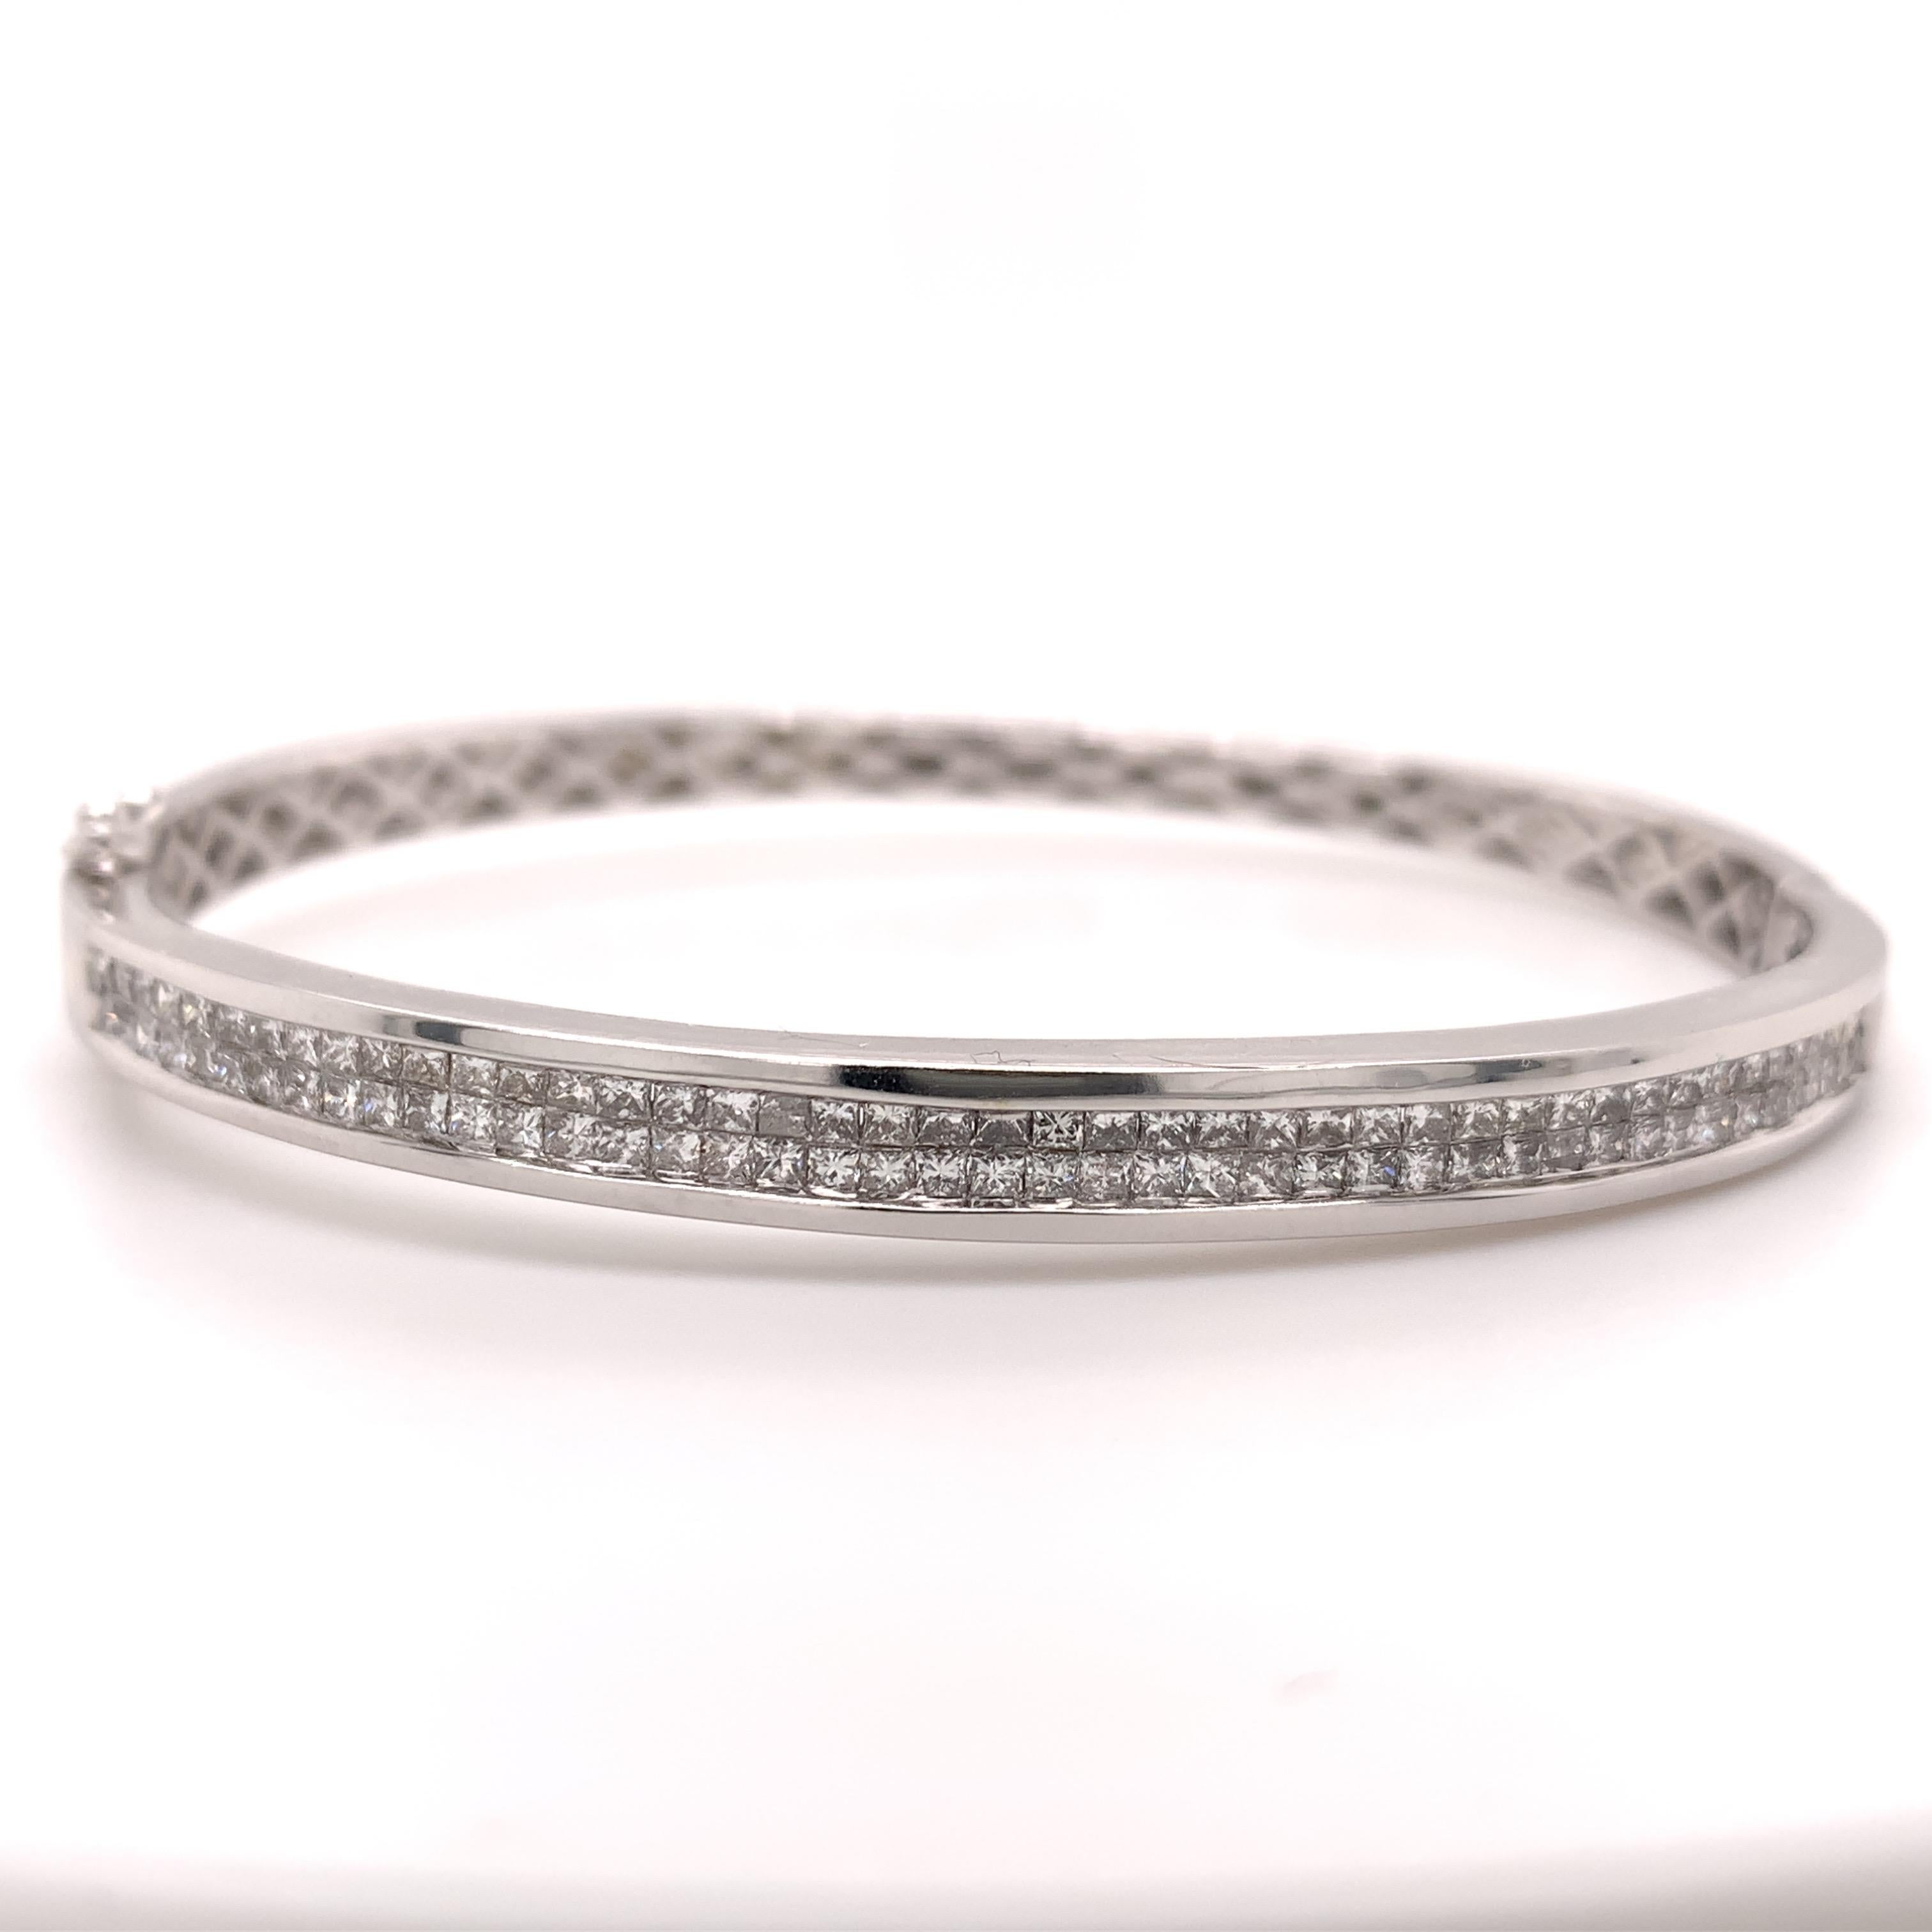 Contemporary 1.75 Carat Princes Cut Diamond Bangle Bracelet